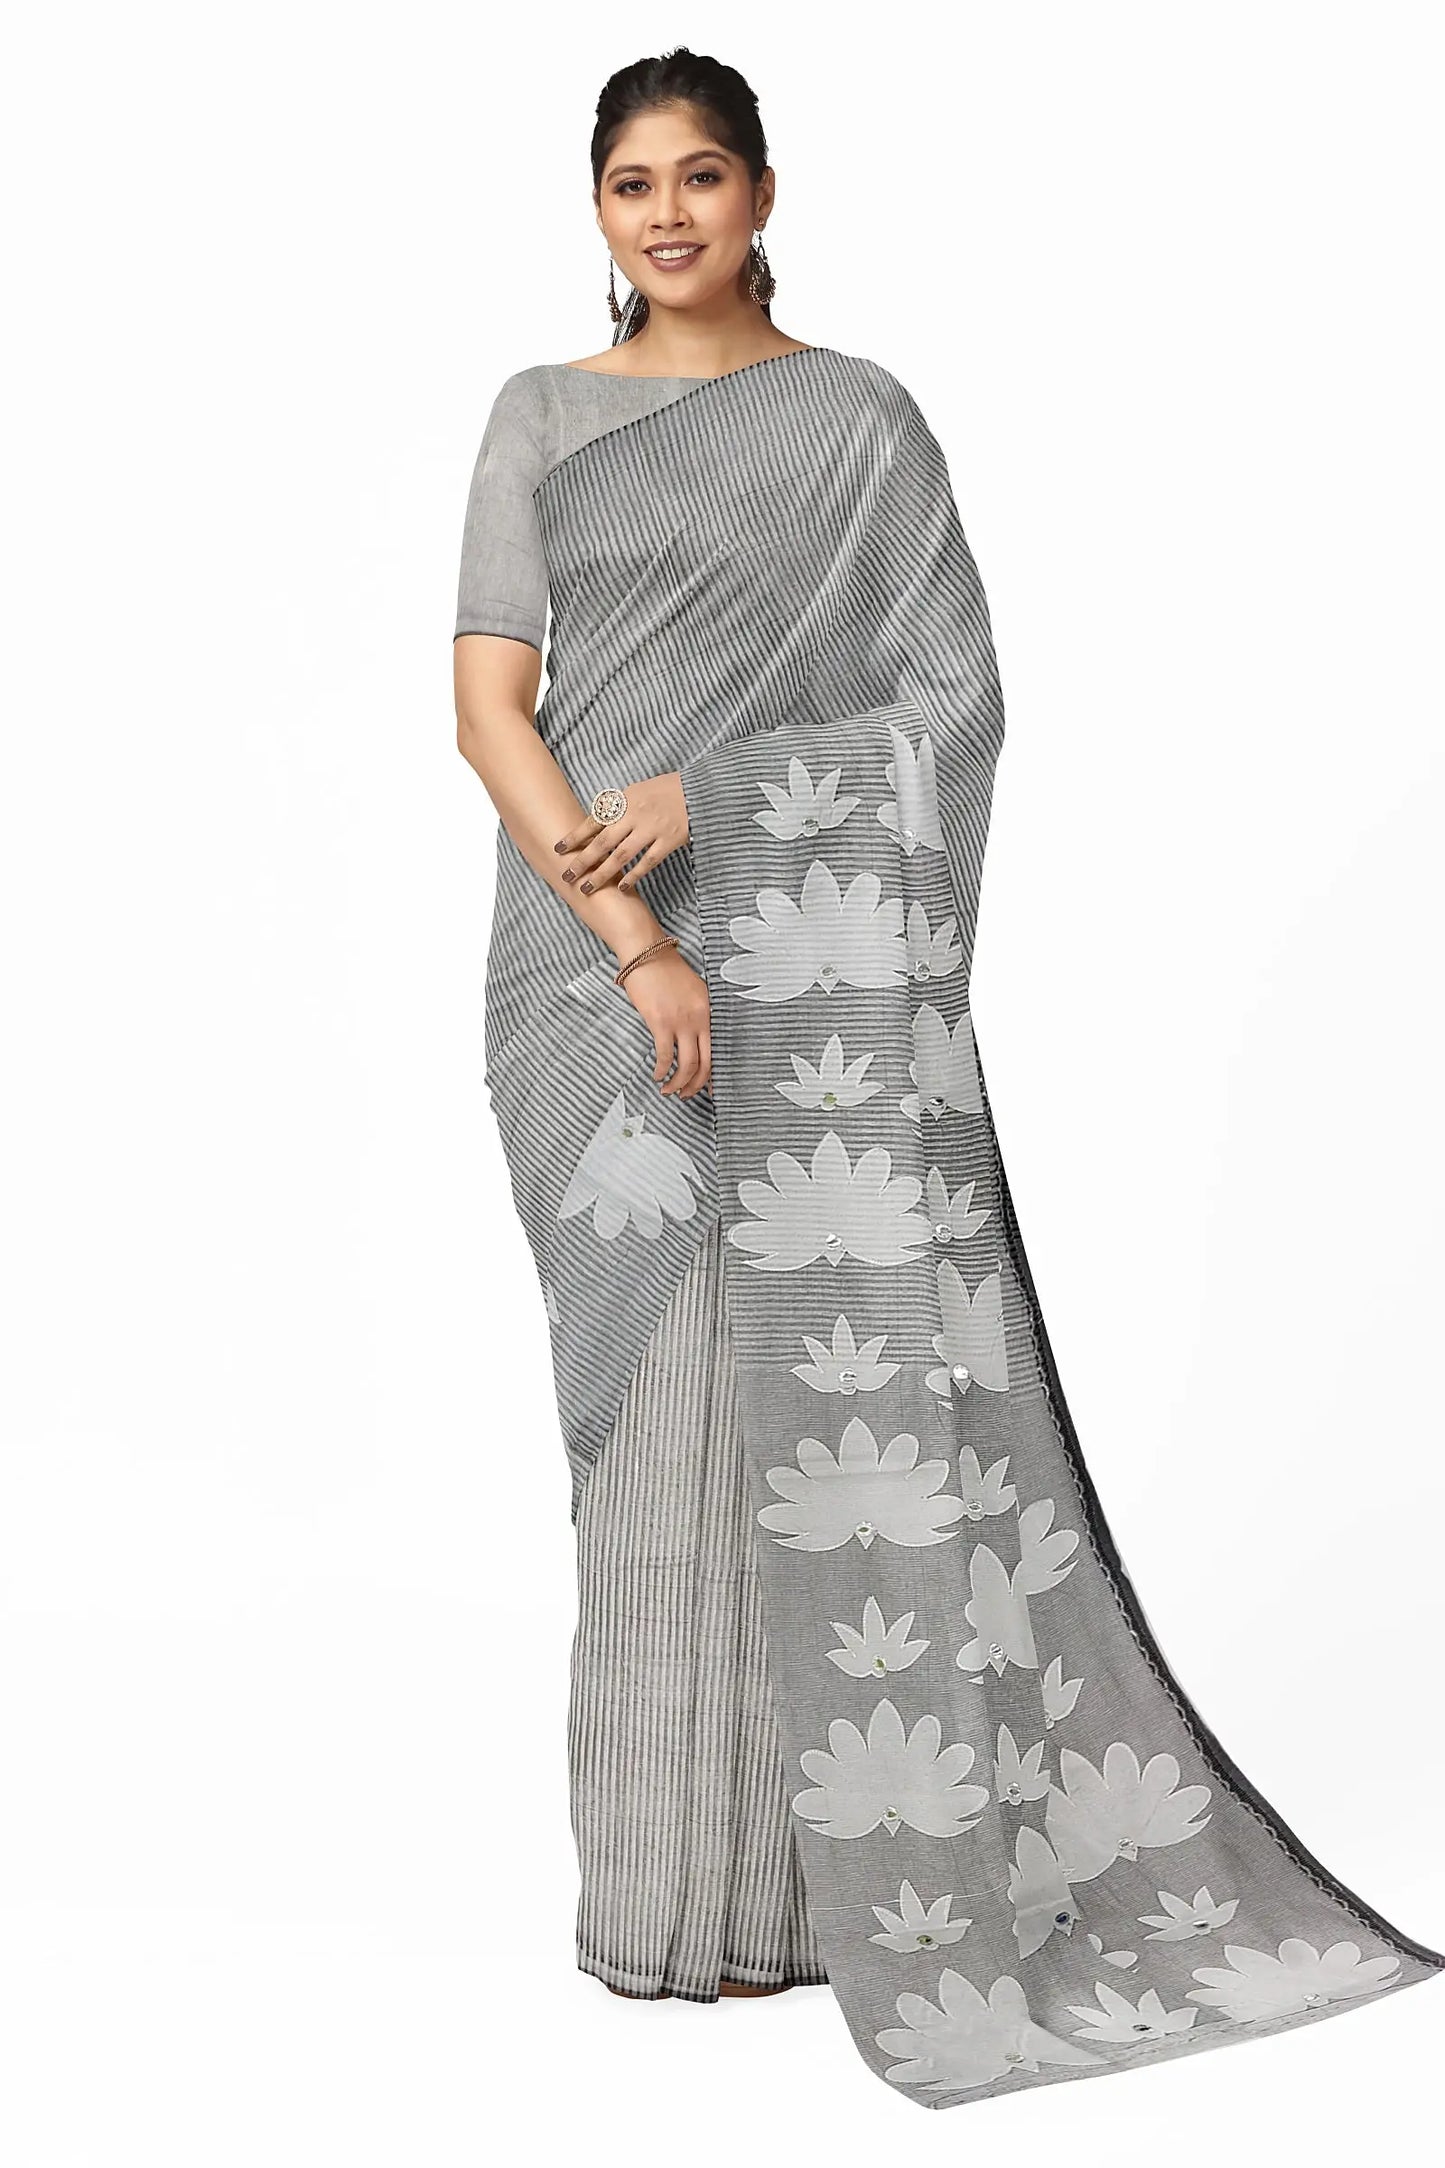 Applique saree on noyel fabric Ash Putul's fashion